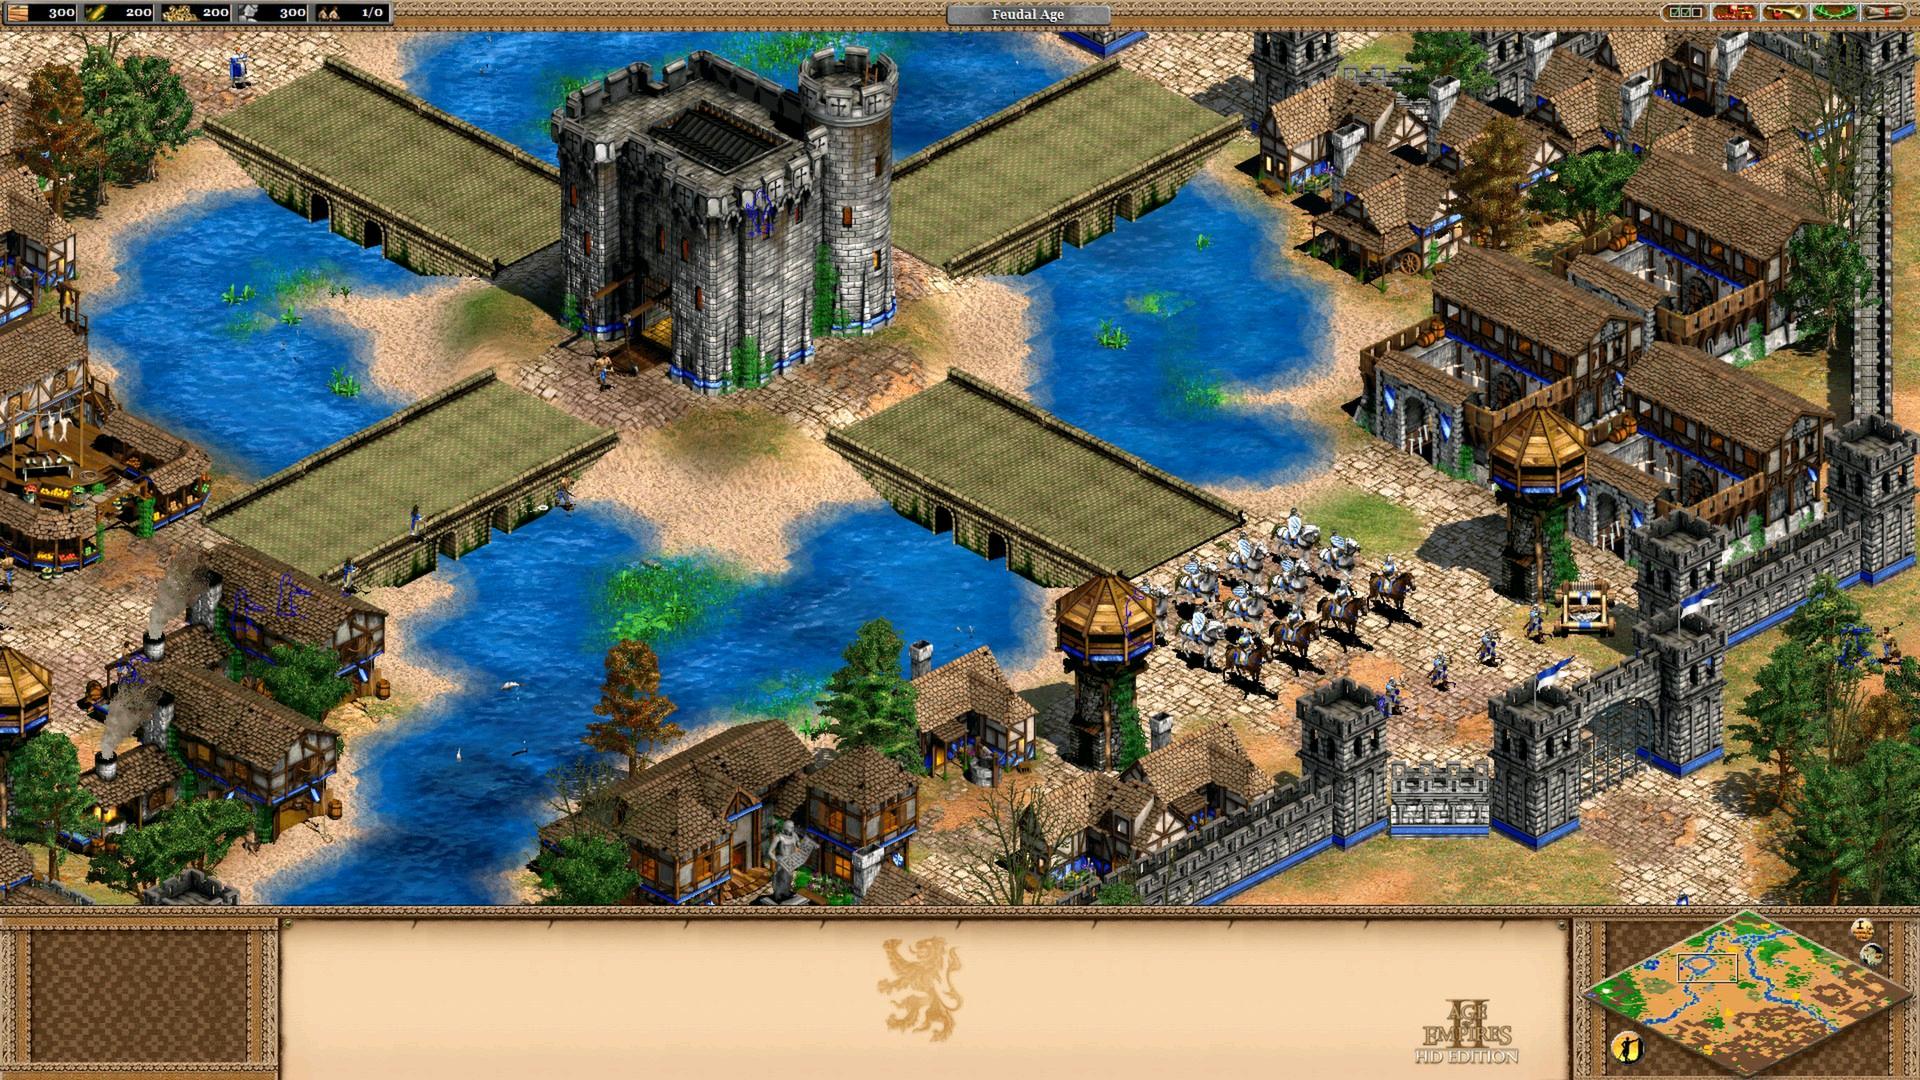 Age-of-Empires-II-2-HD-Steam-Screenshot-Release-Date-9th-April-5th.jpg